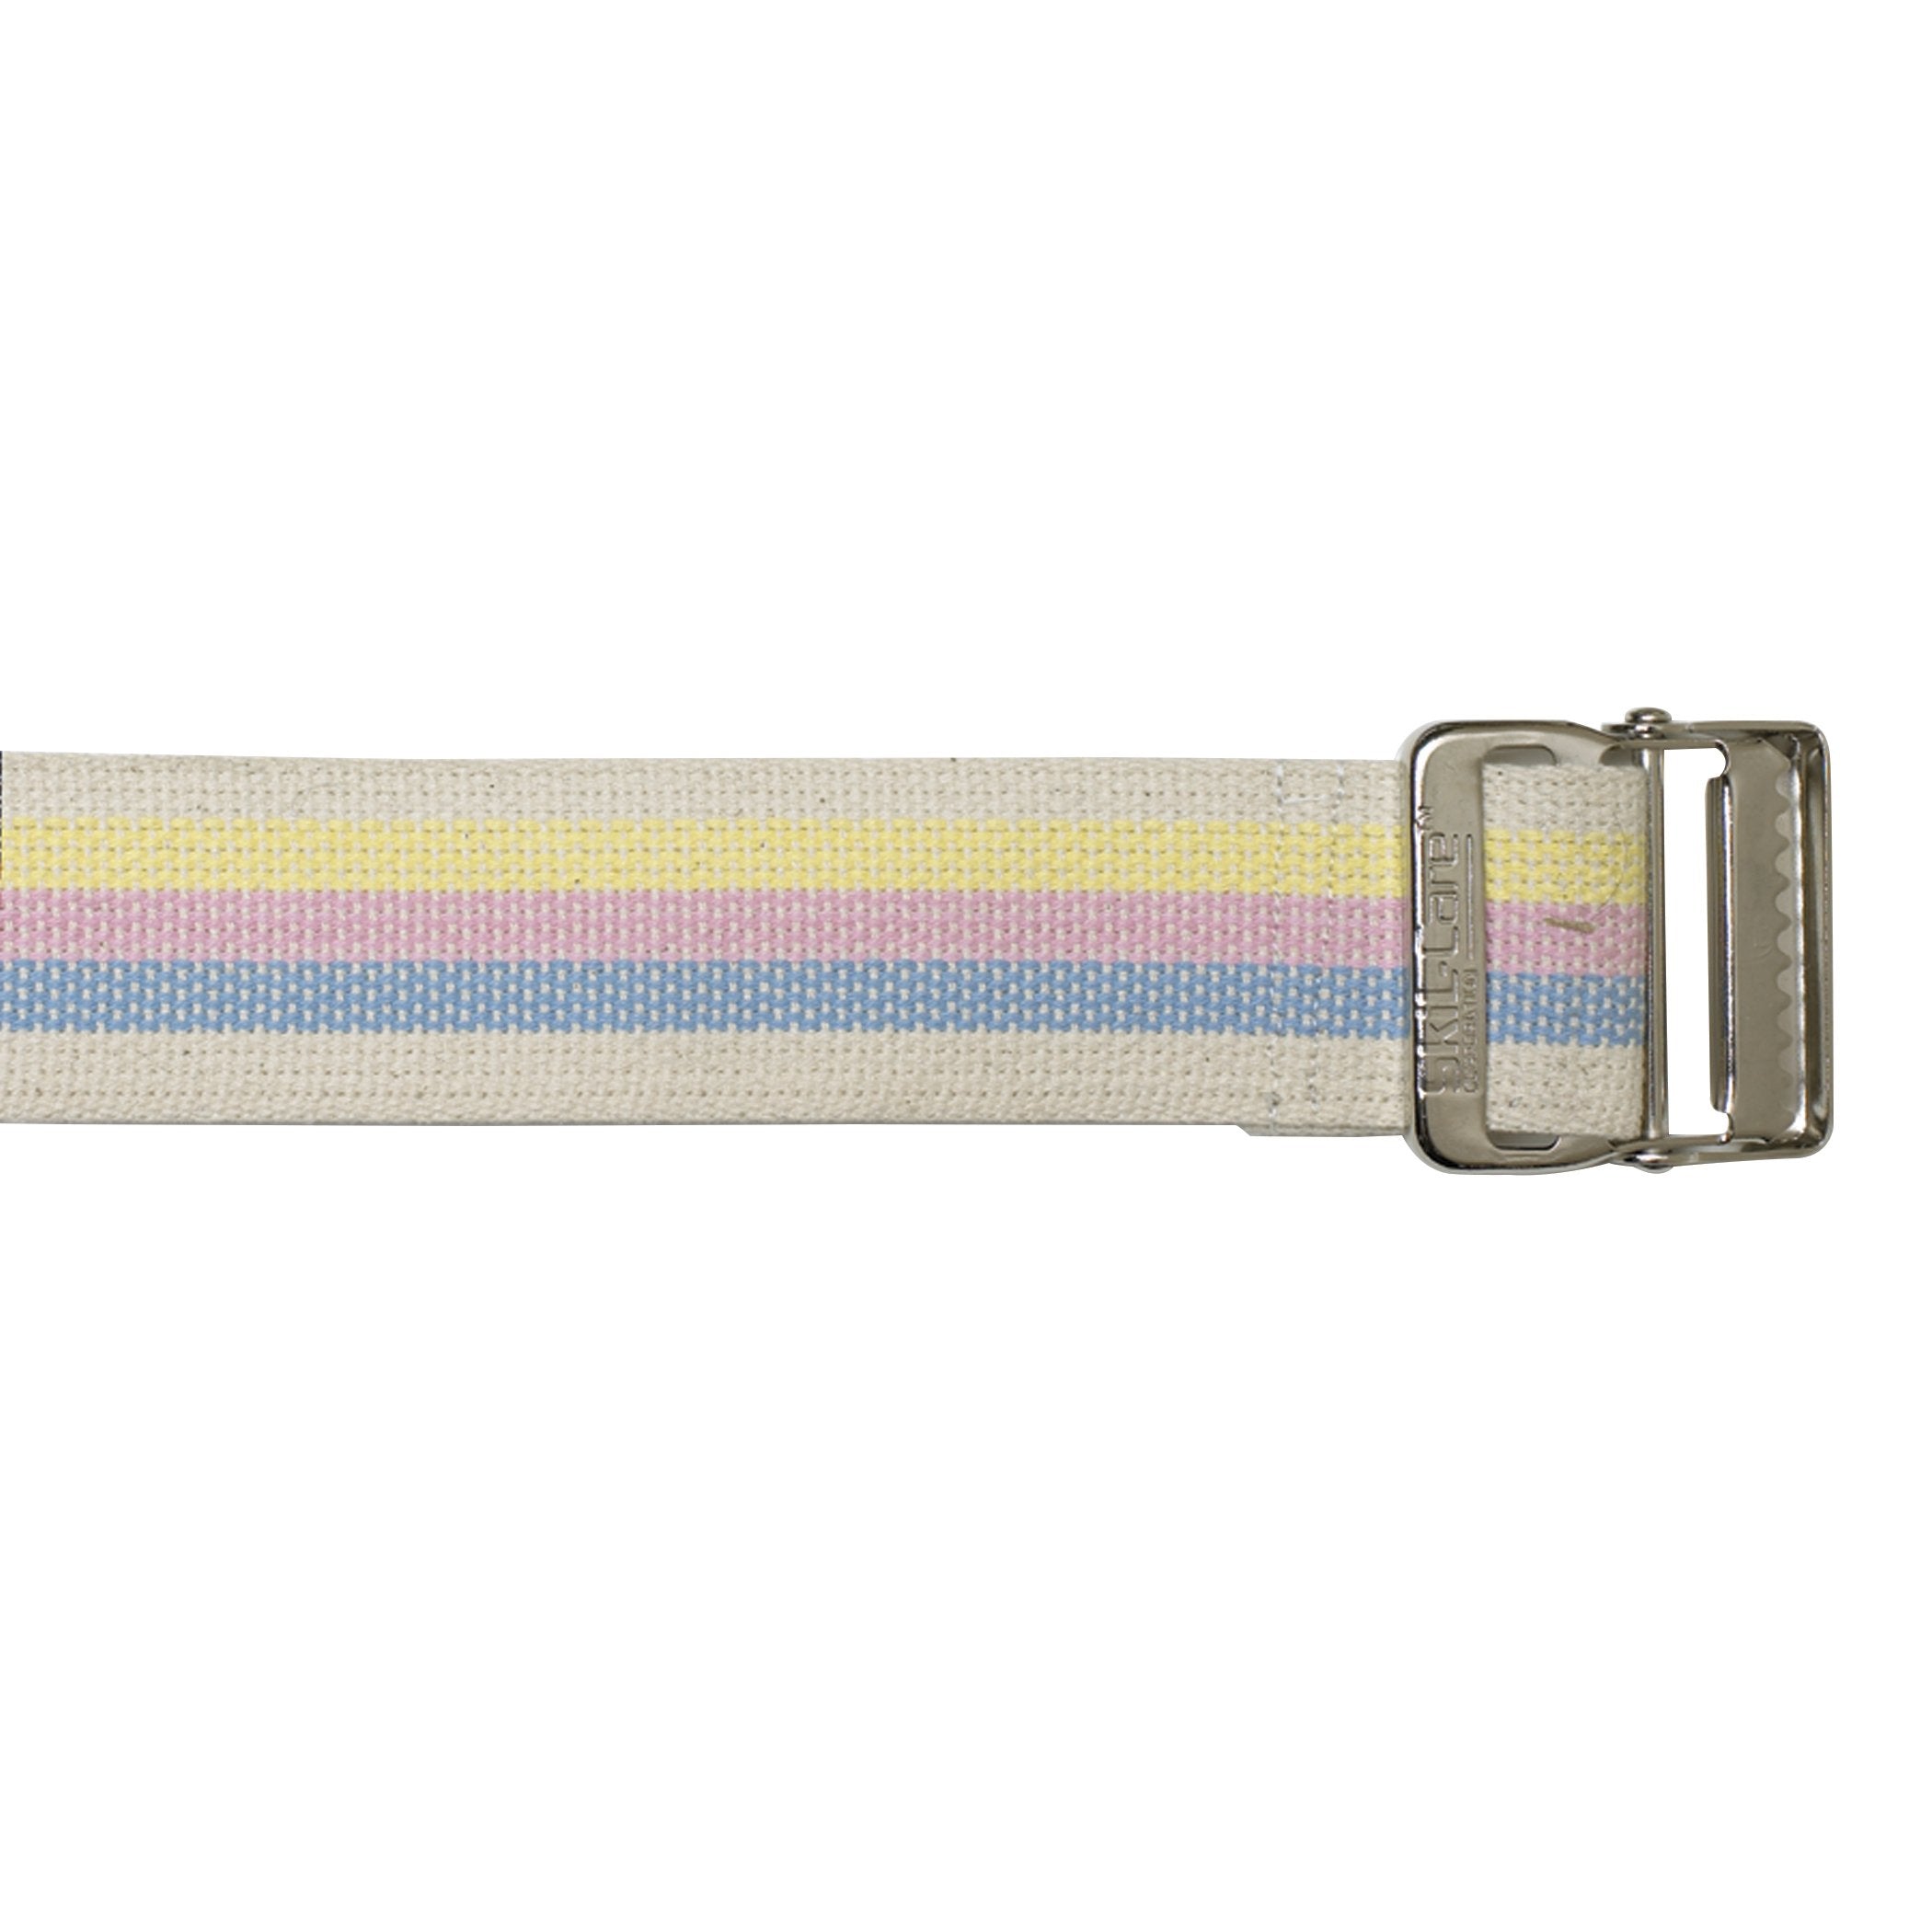 Gait Belt SkiL-Care 60 Inch Length Pastel Stripe Cotton